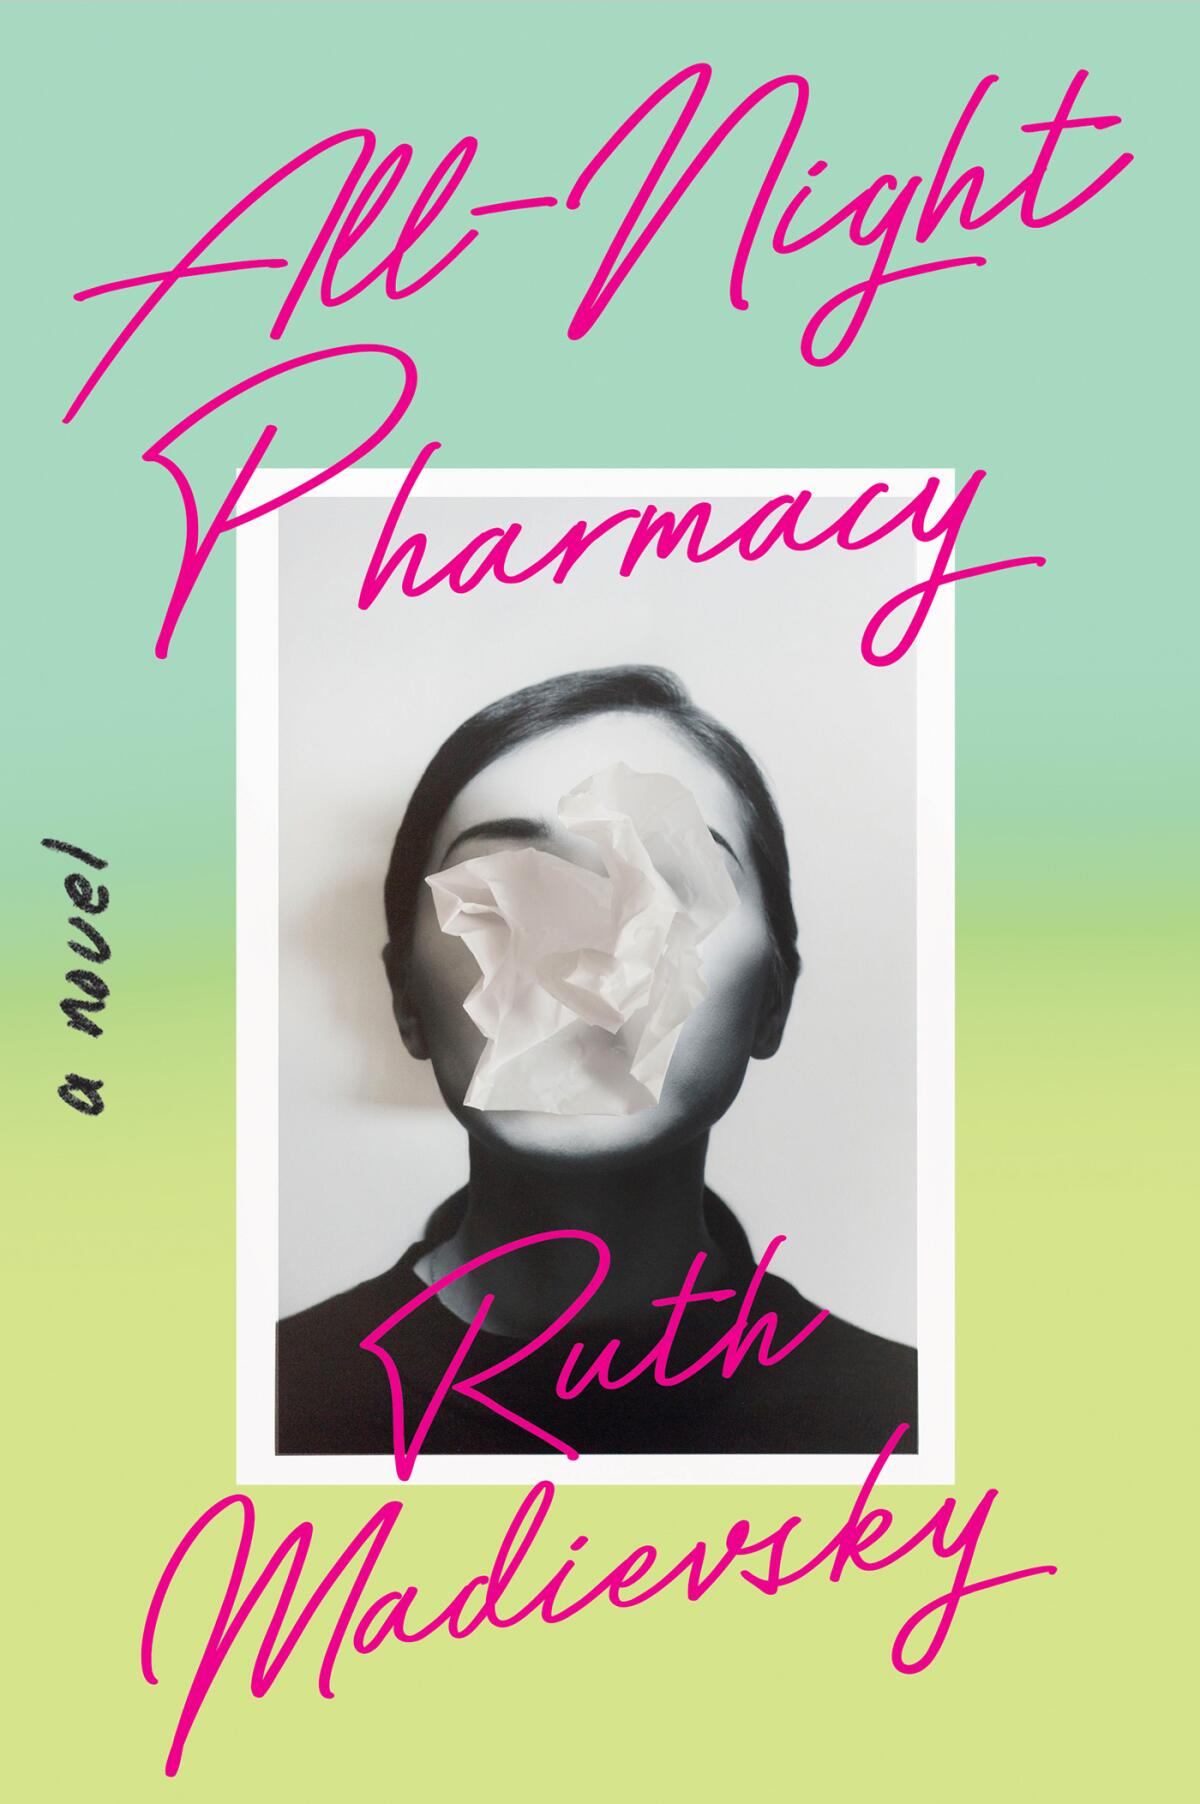 "overnight pharmacy," By Ruth Madievsky